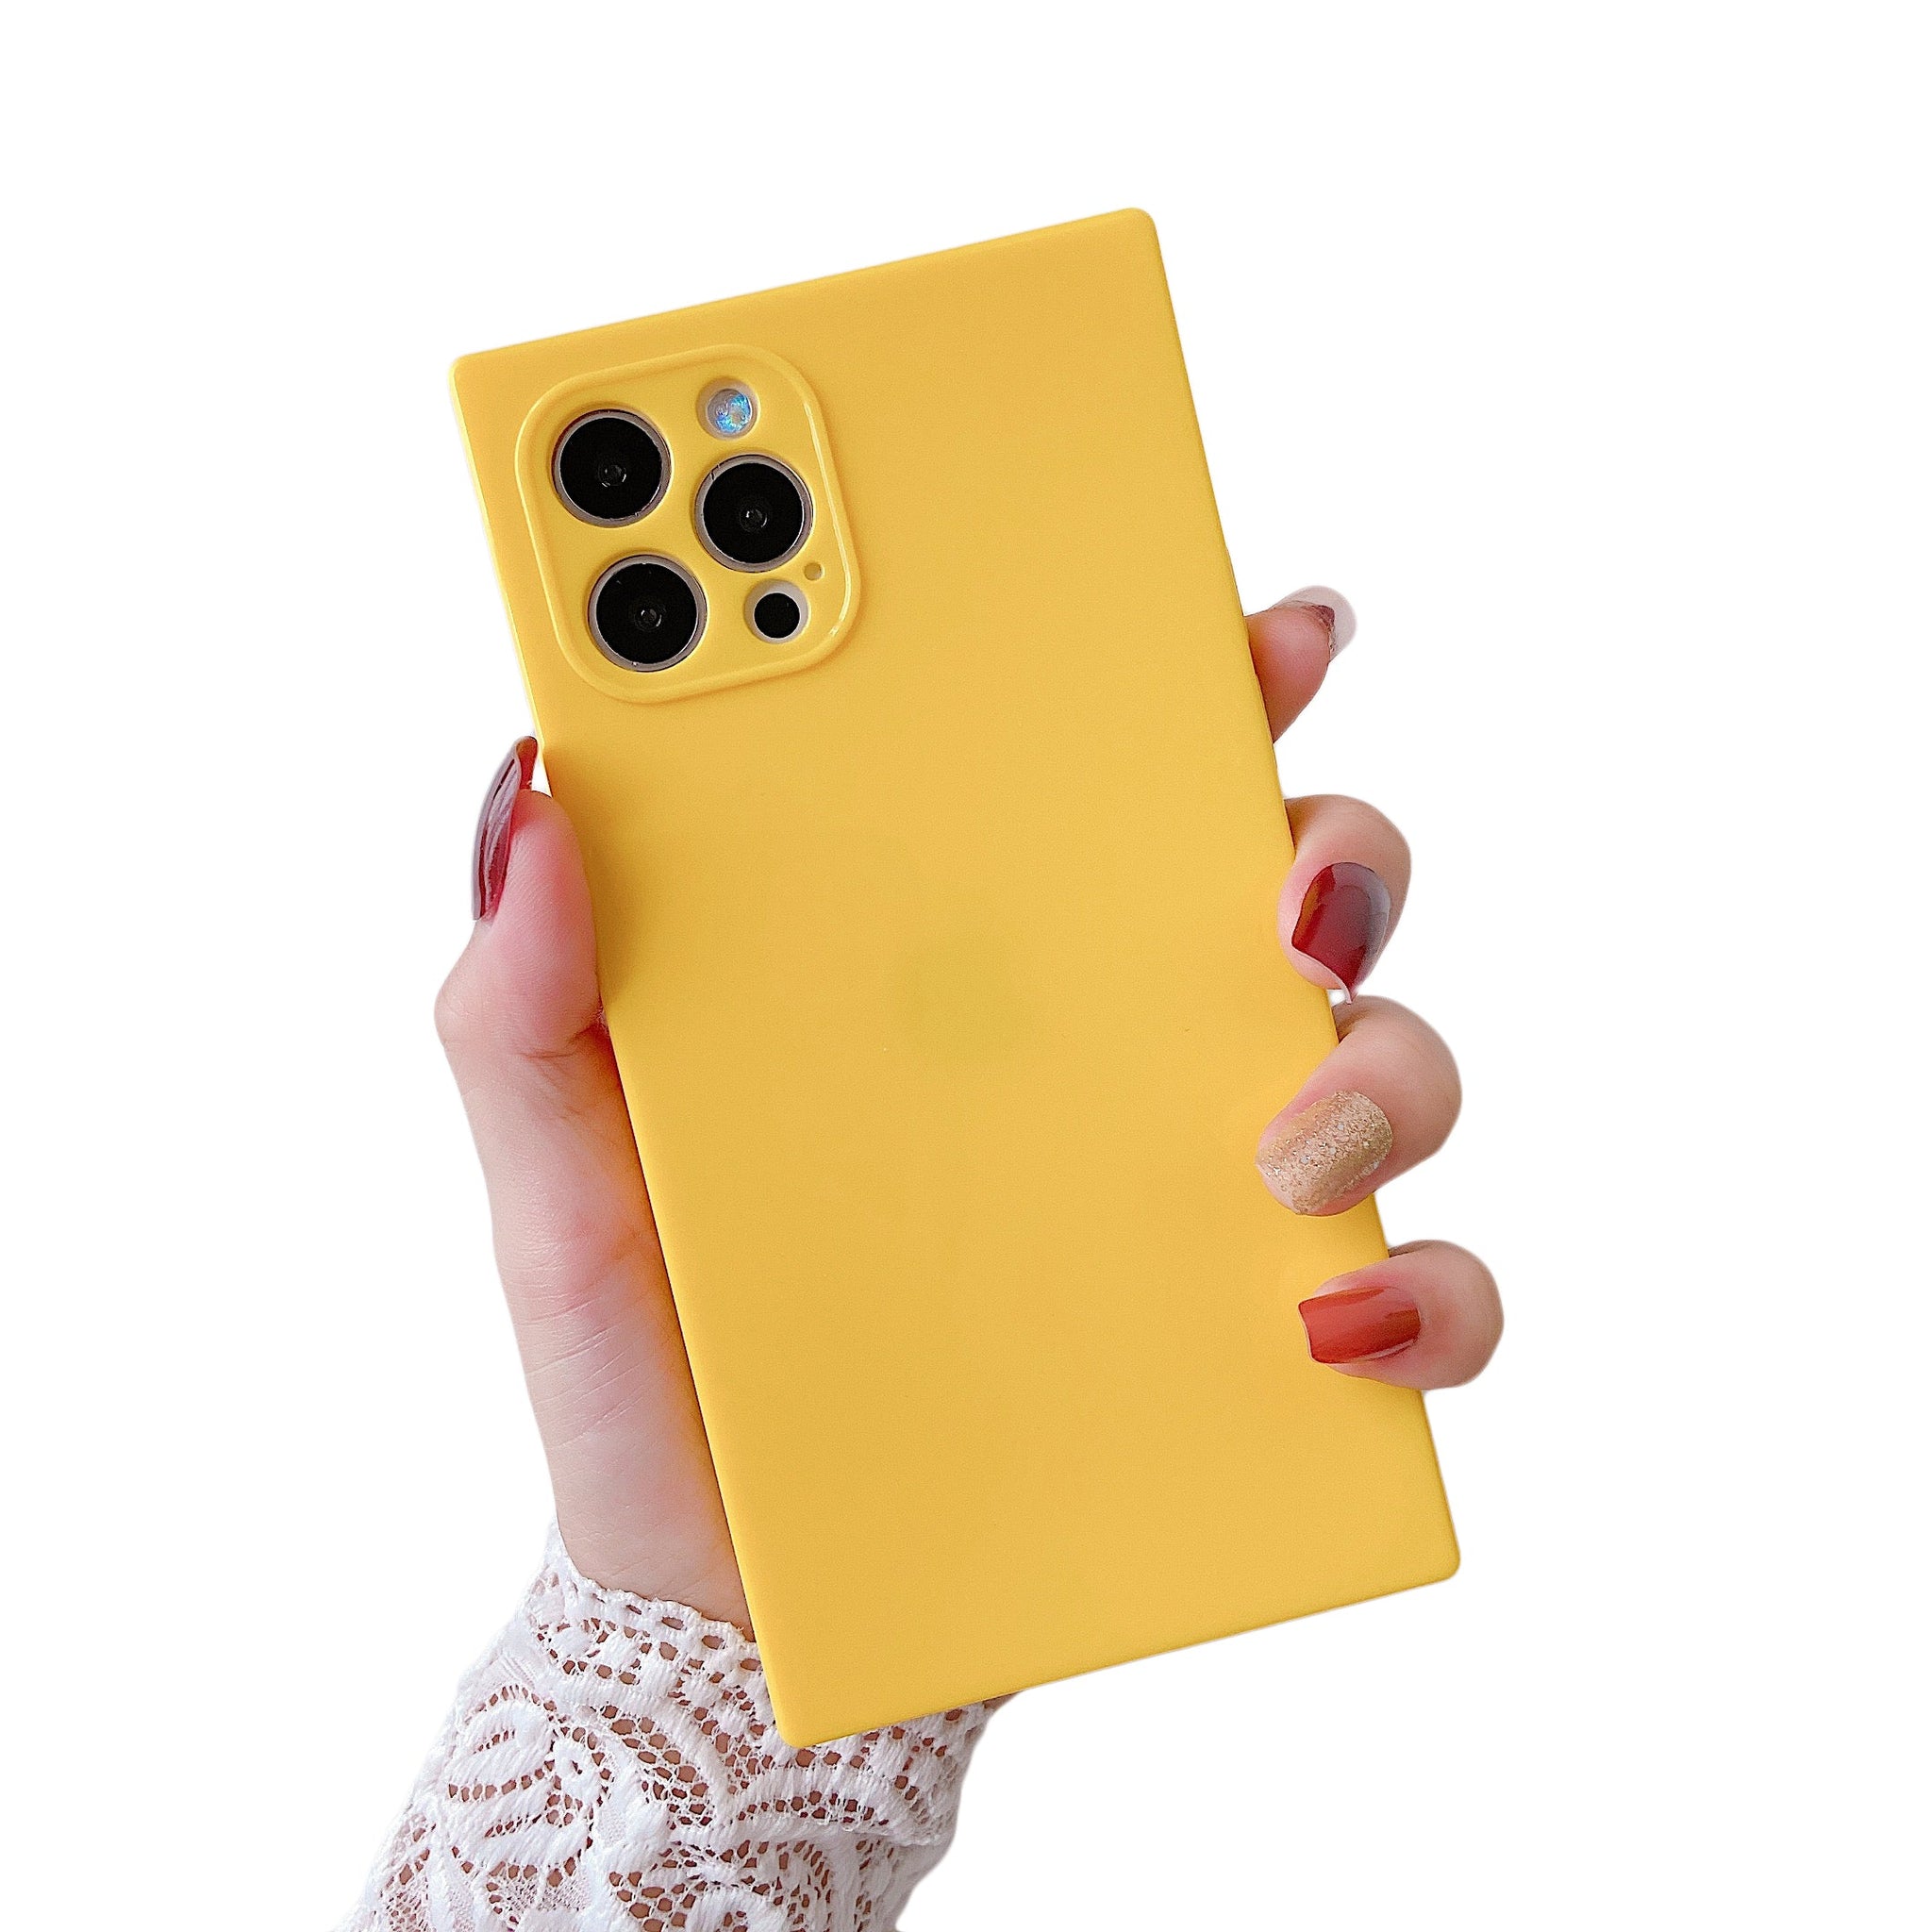 iPhone 11 Pro Max Case Square Plain Color (Yellow)